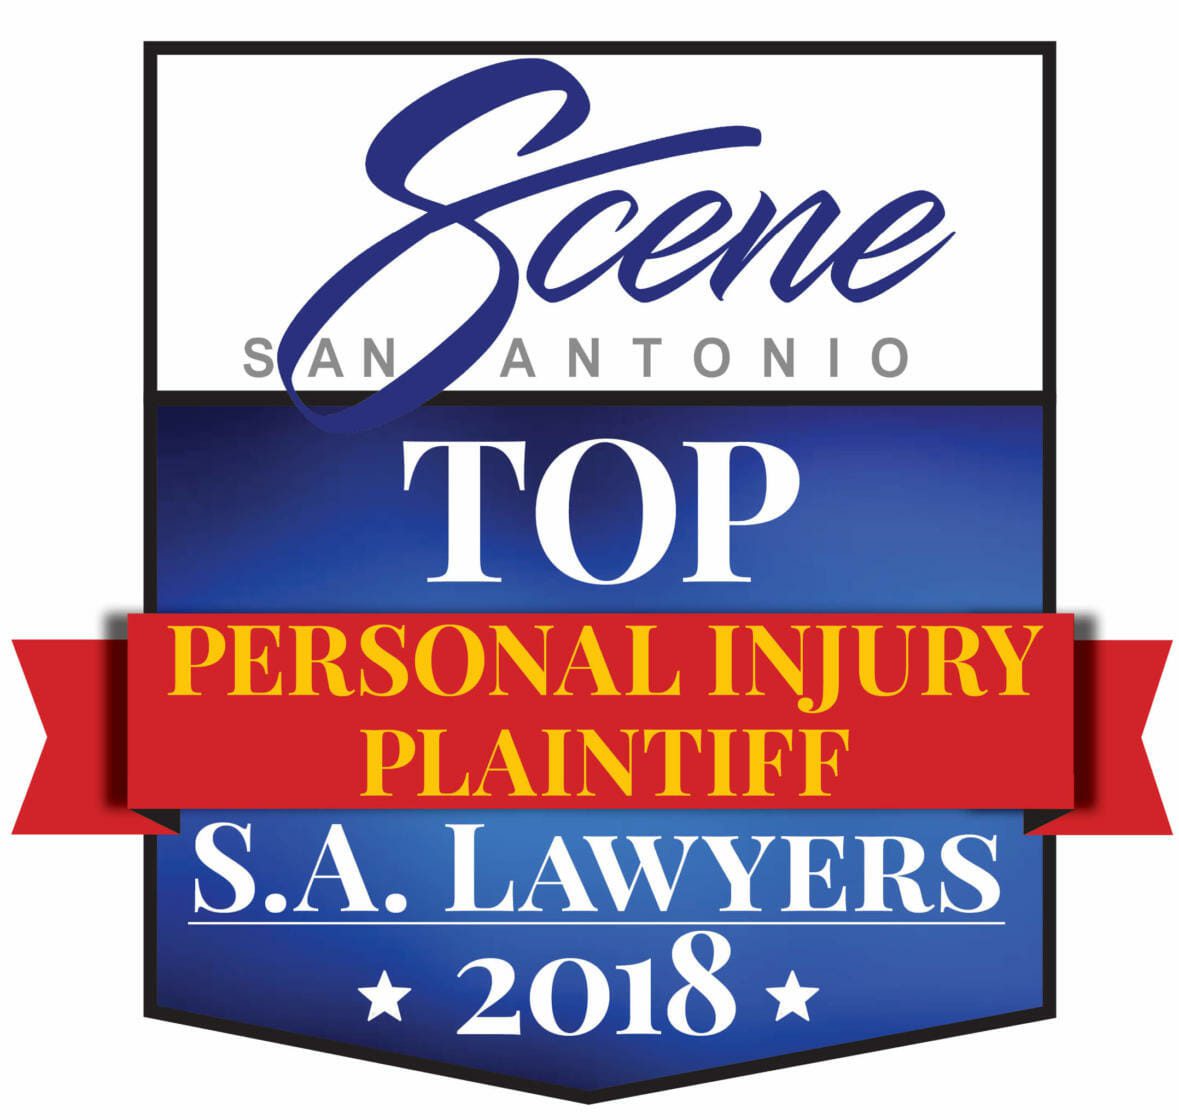 Scene San Antonio Top Personal Injury Plaintiff SA Lawyers 2018 accolade